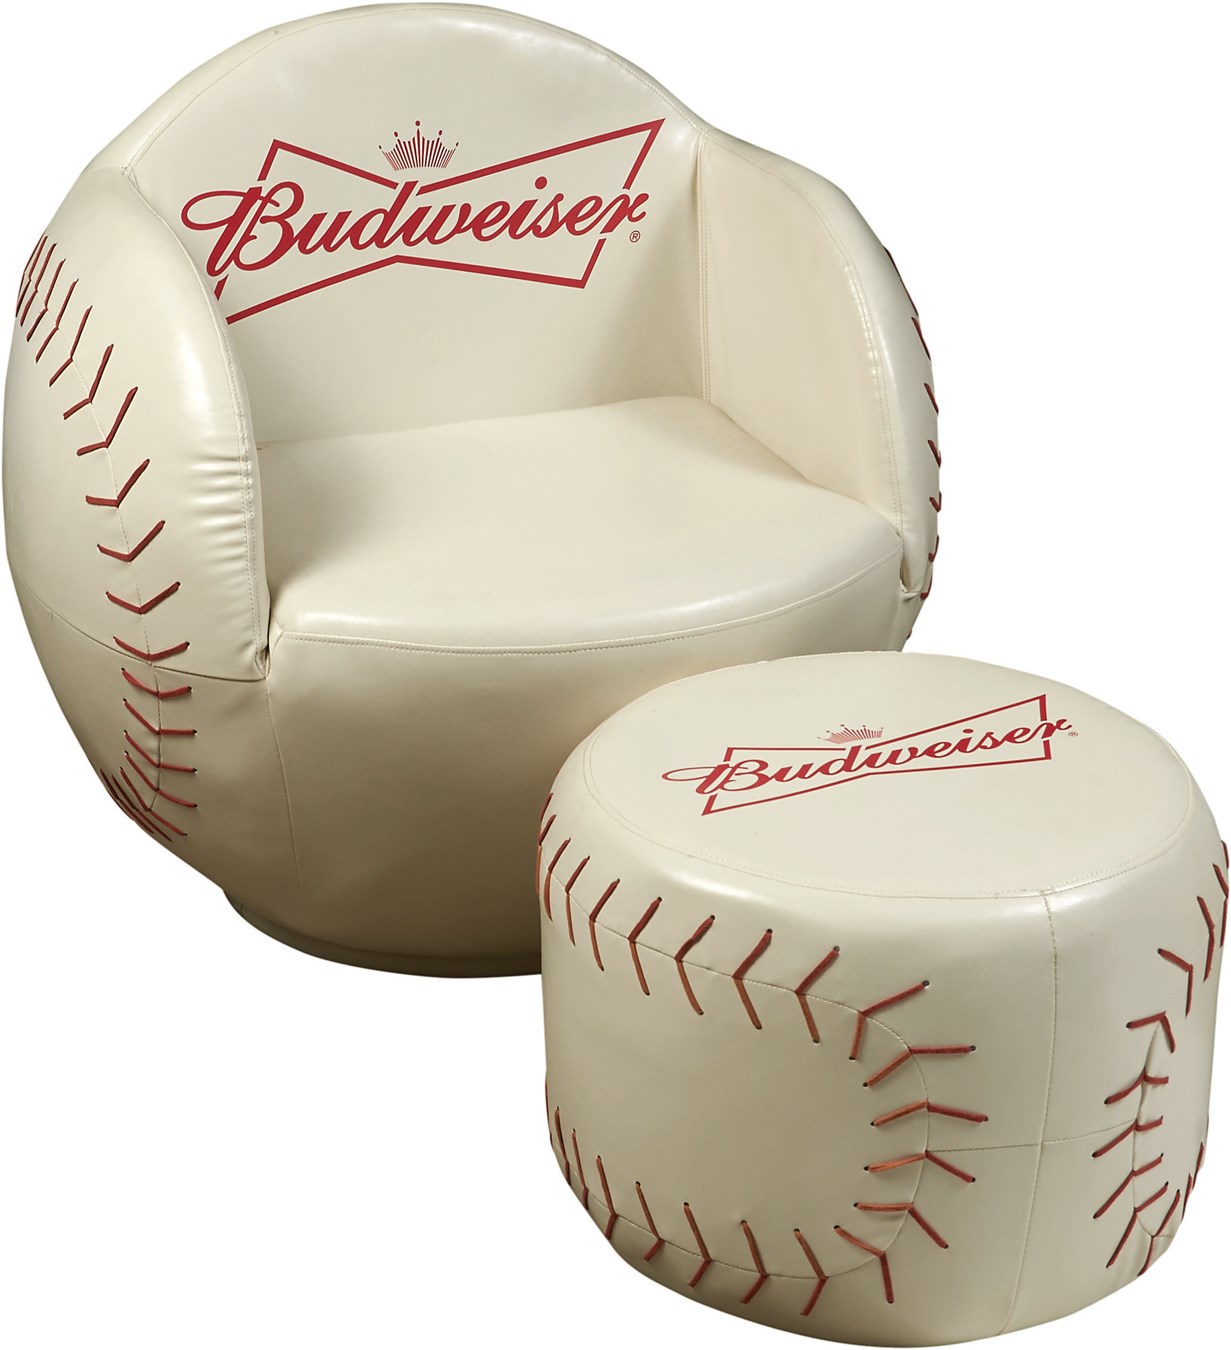 - Budweiser Promotional Baseball Chair and Ottoman